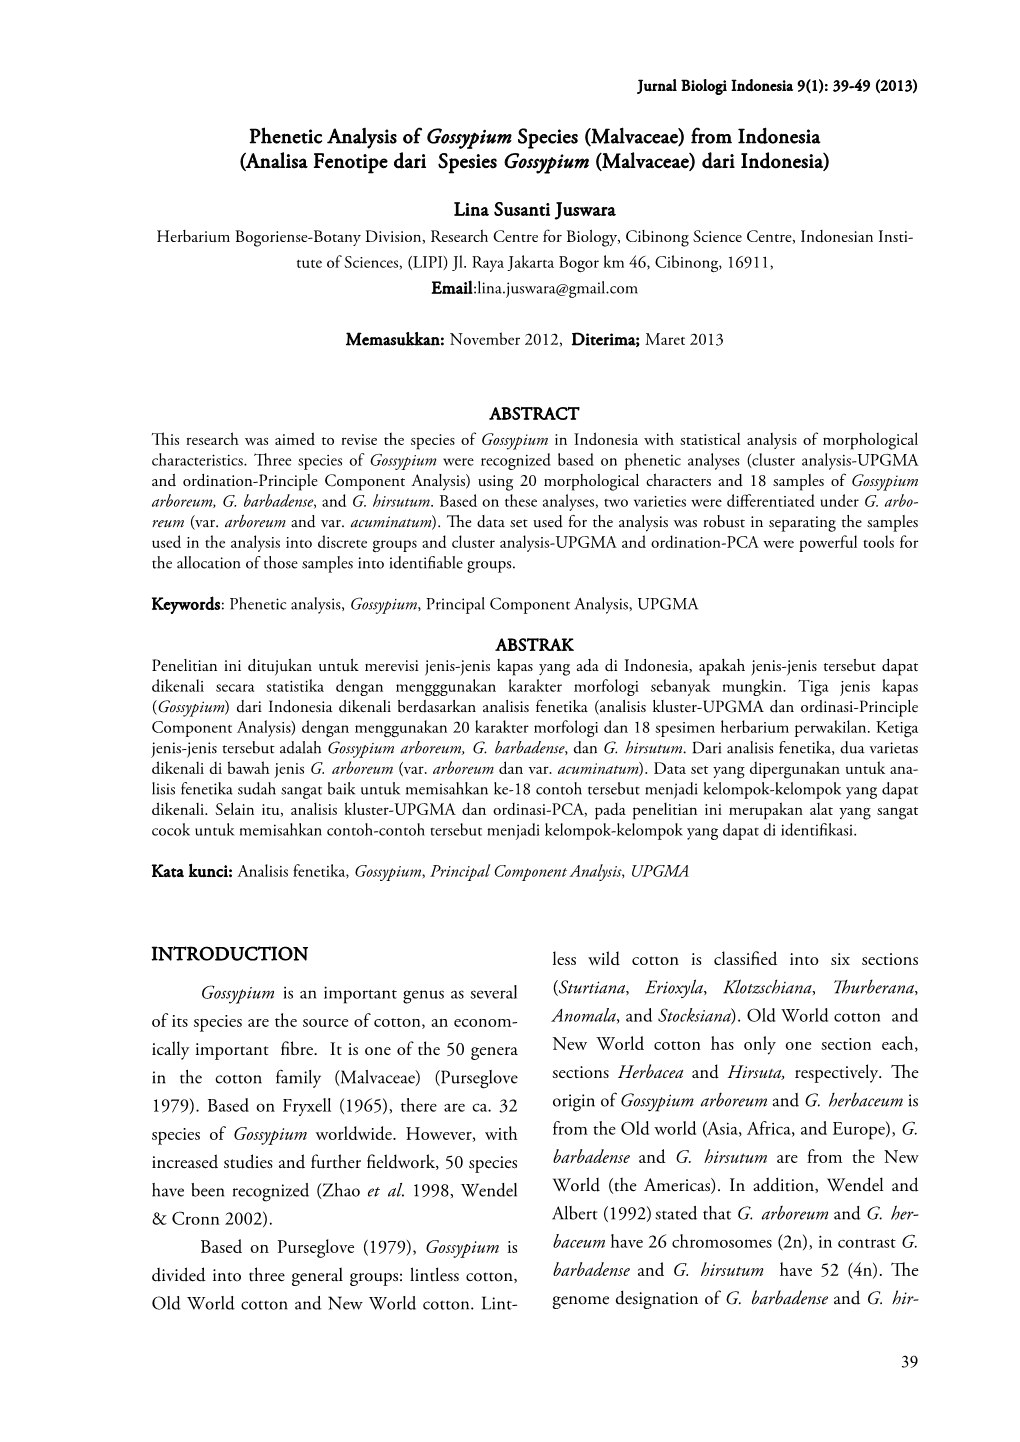 Phenetic Analysis of Gossypium Species (Malvaceae) from Indonesia (Analisa Fenotipe Dari Spesies Gossypium (Malvaceae) Dari Indonesia)